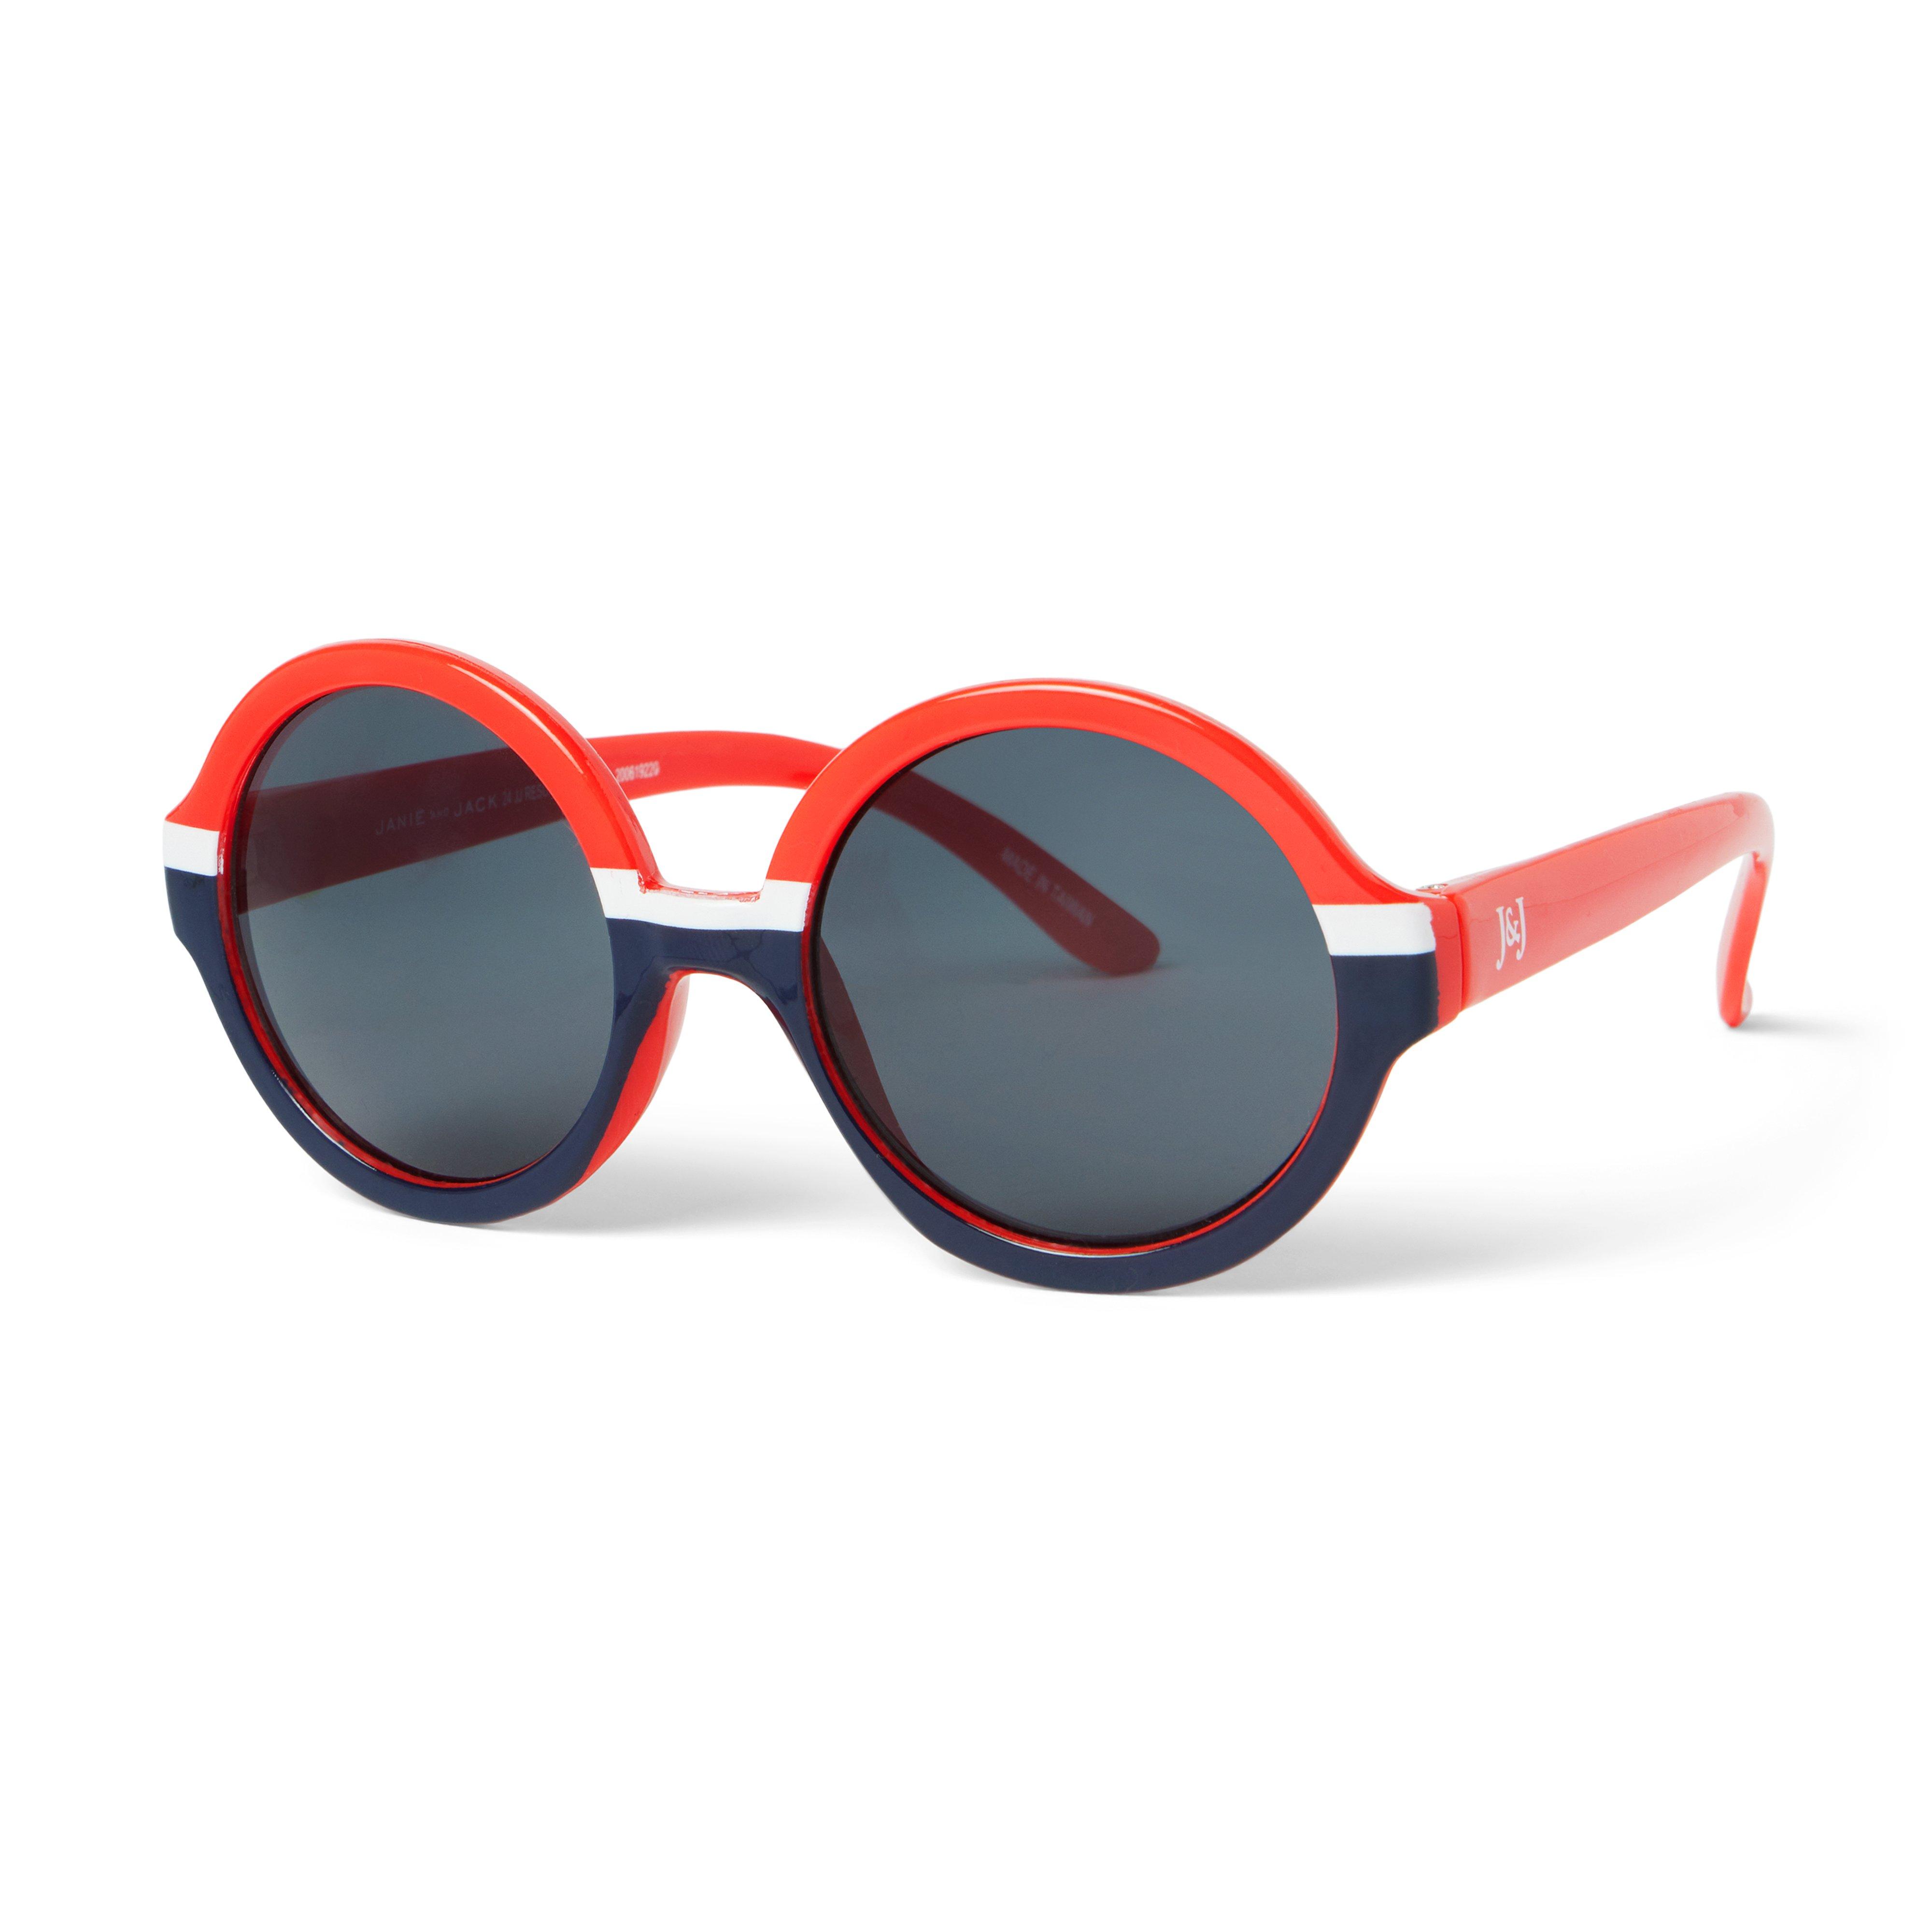 Colorblocked Round Sunglasses